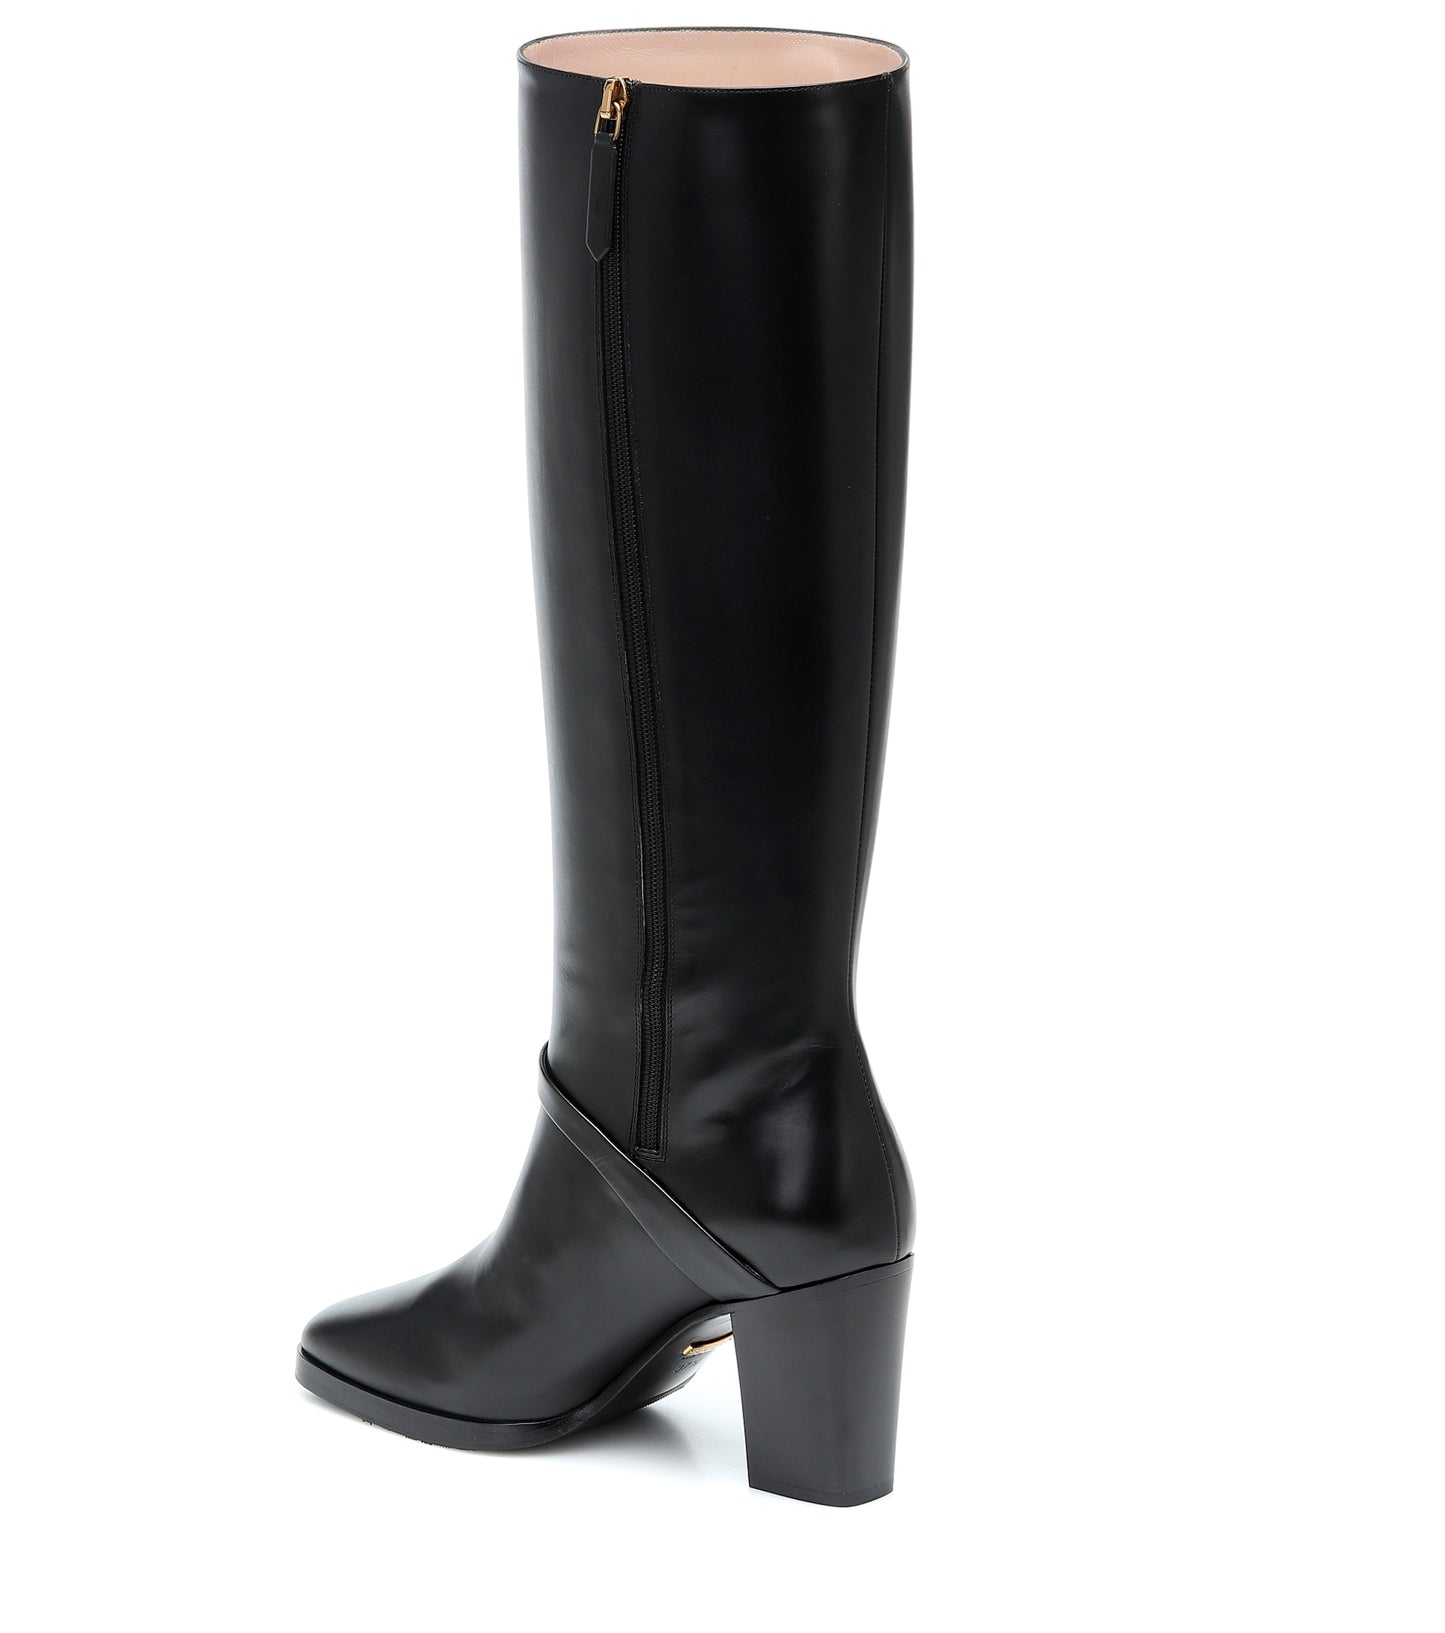 TinaCus Women's Square Toe Handmade Genuine Leather Side Zip Buckle Mid Chunky Heel Classic Knee High Boots